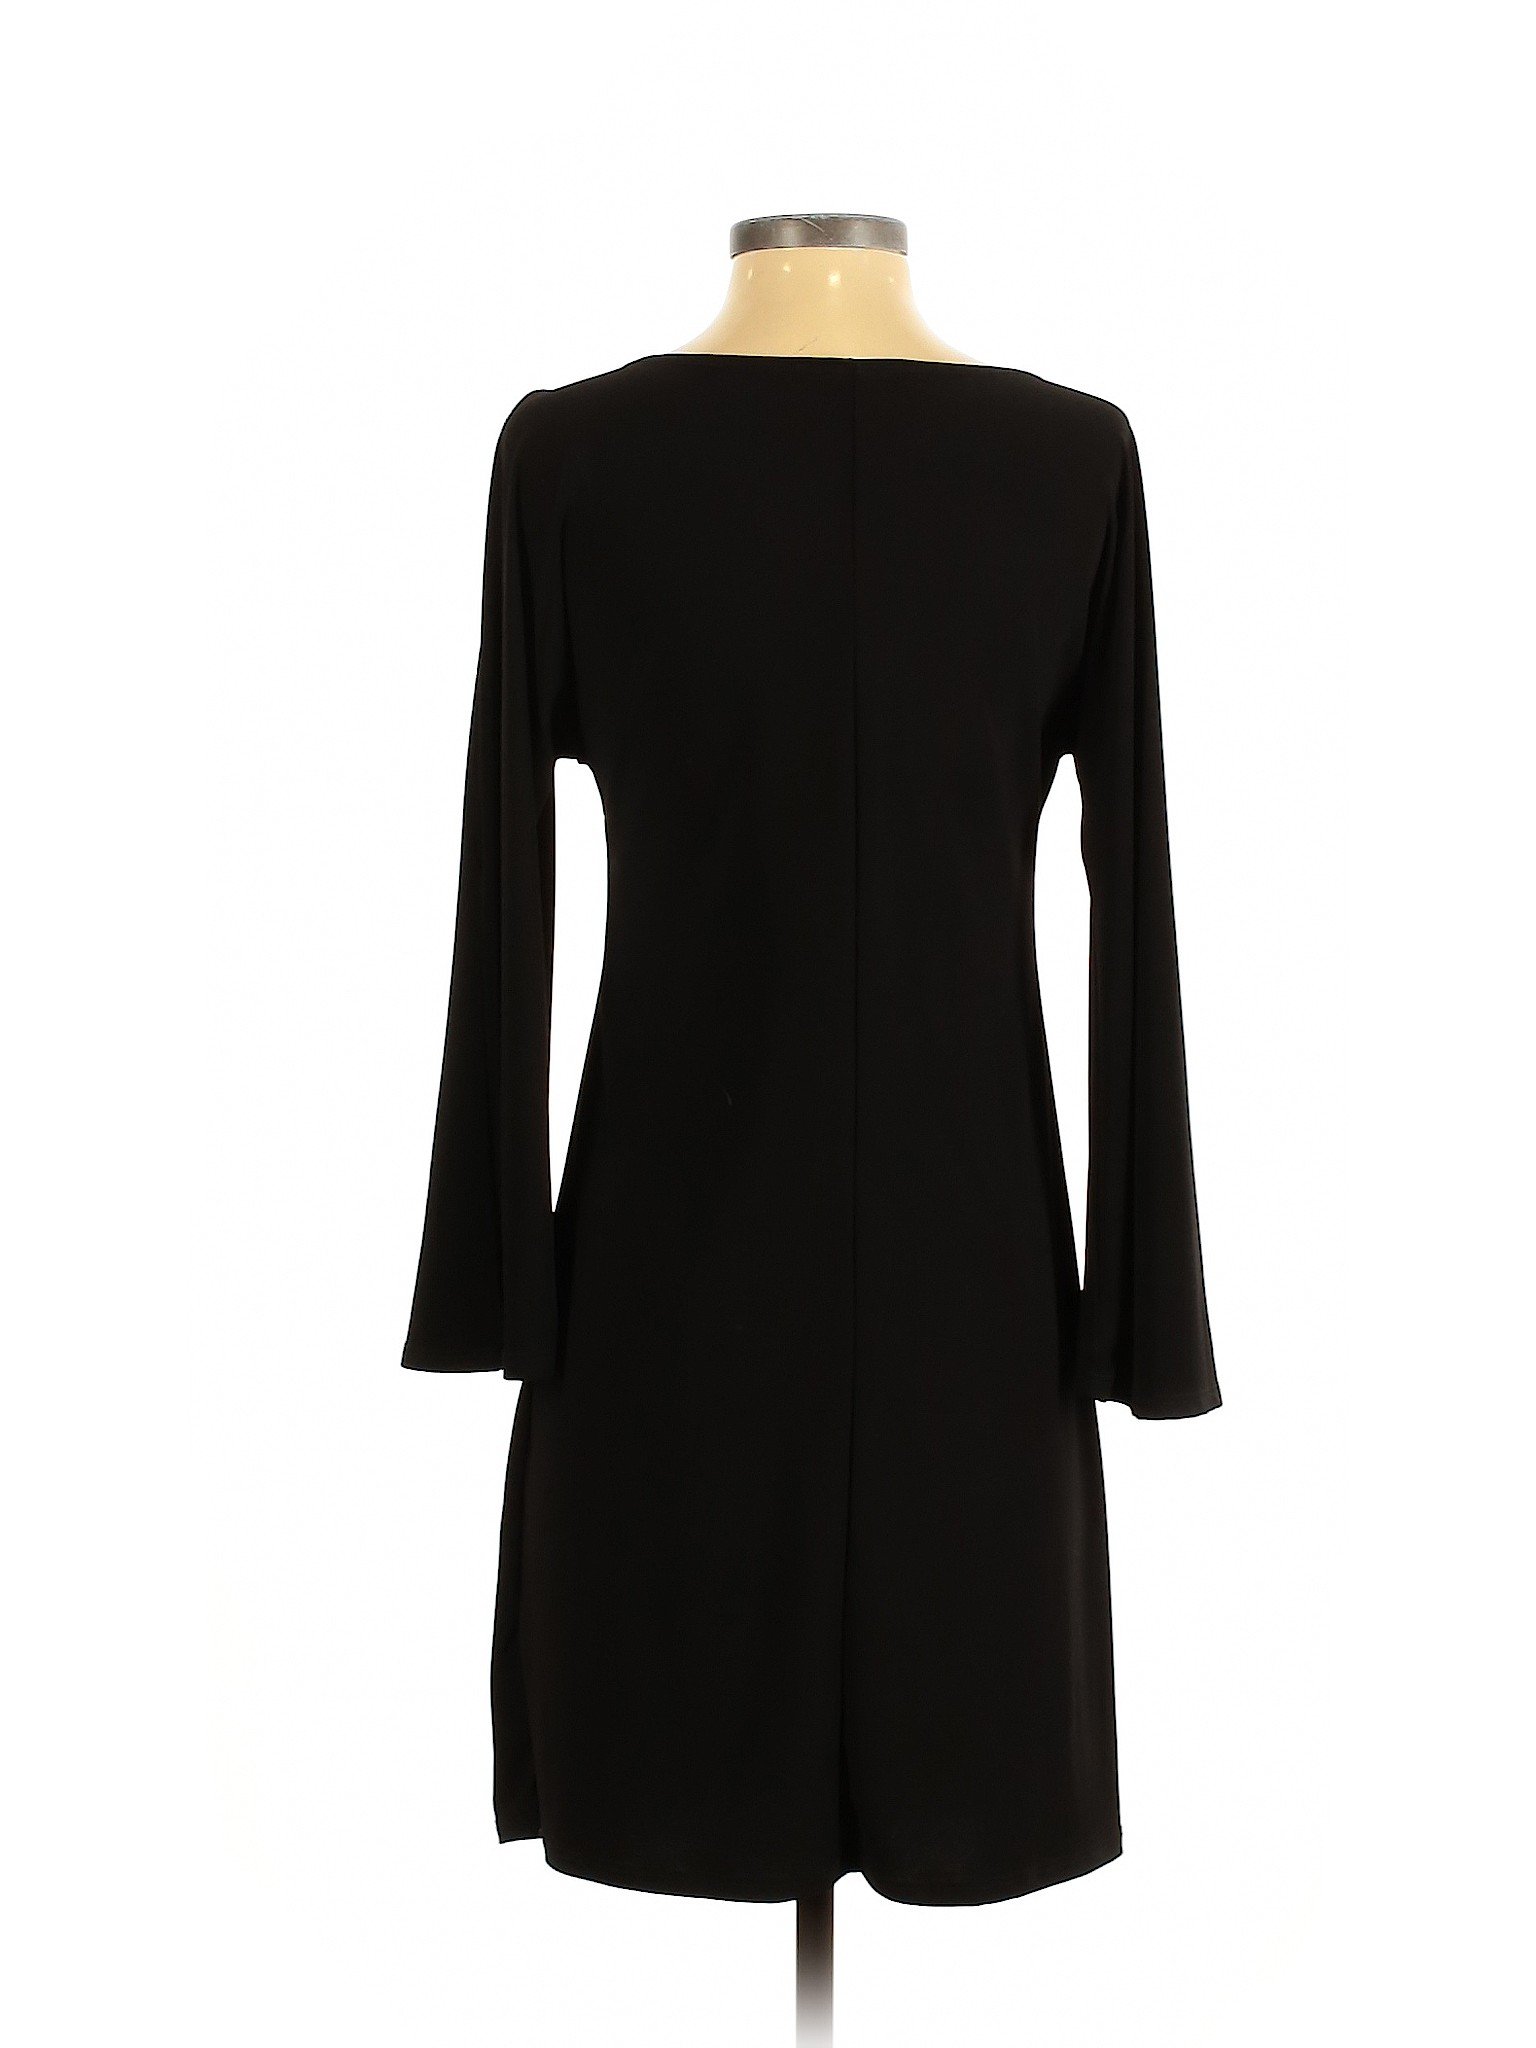 Nik and Nash Women Black Casual Dress S | eBay